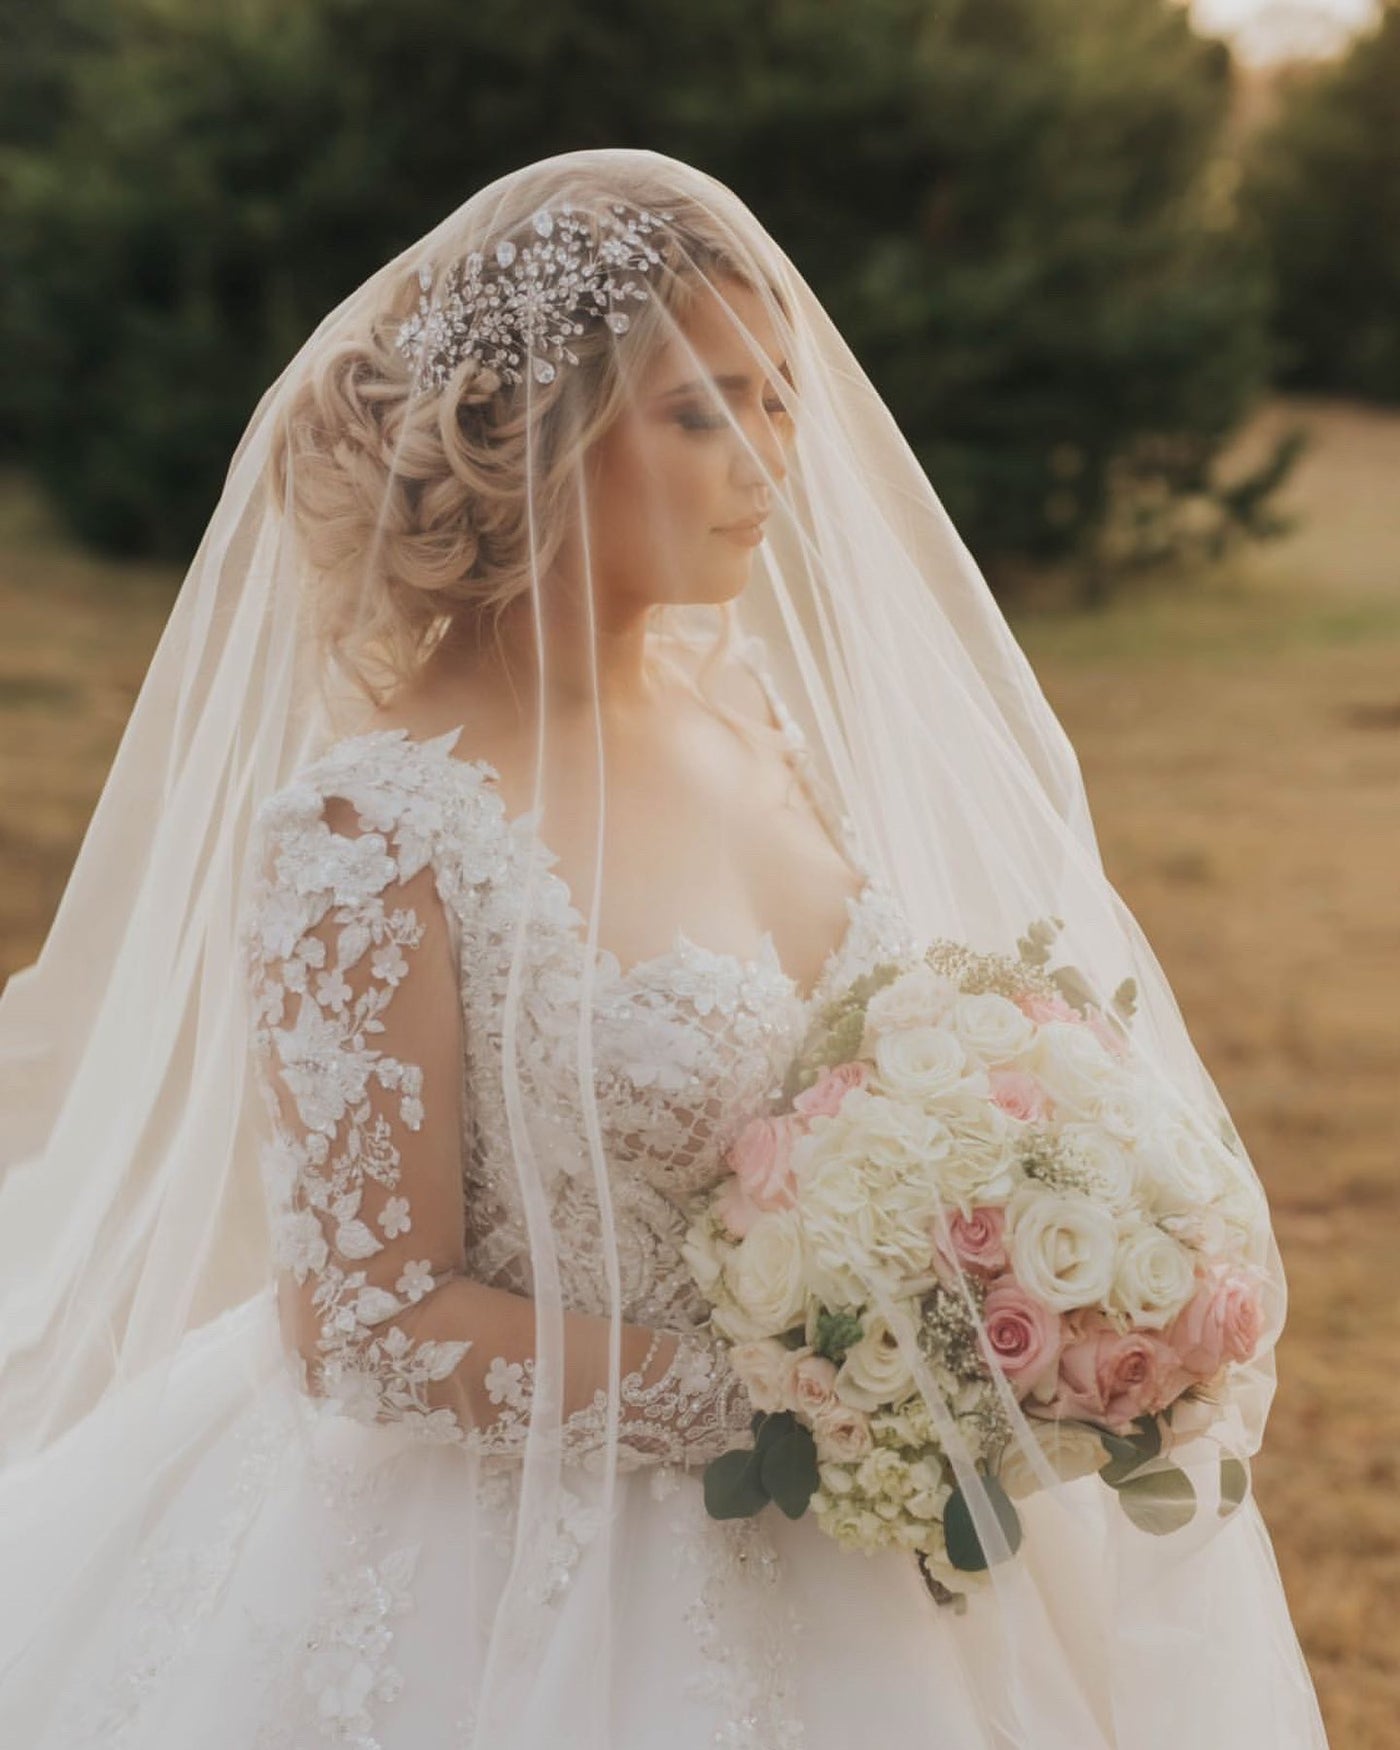 AMOUR Swarovski Stunning Side Piece, Wedding Headpiece